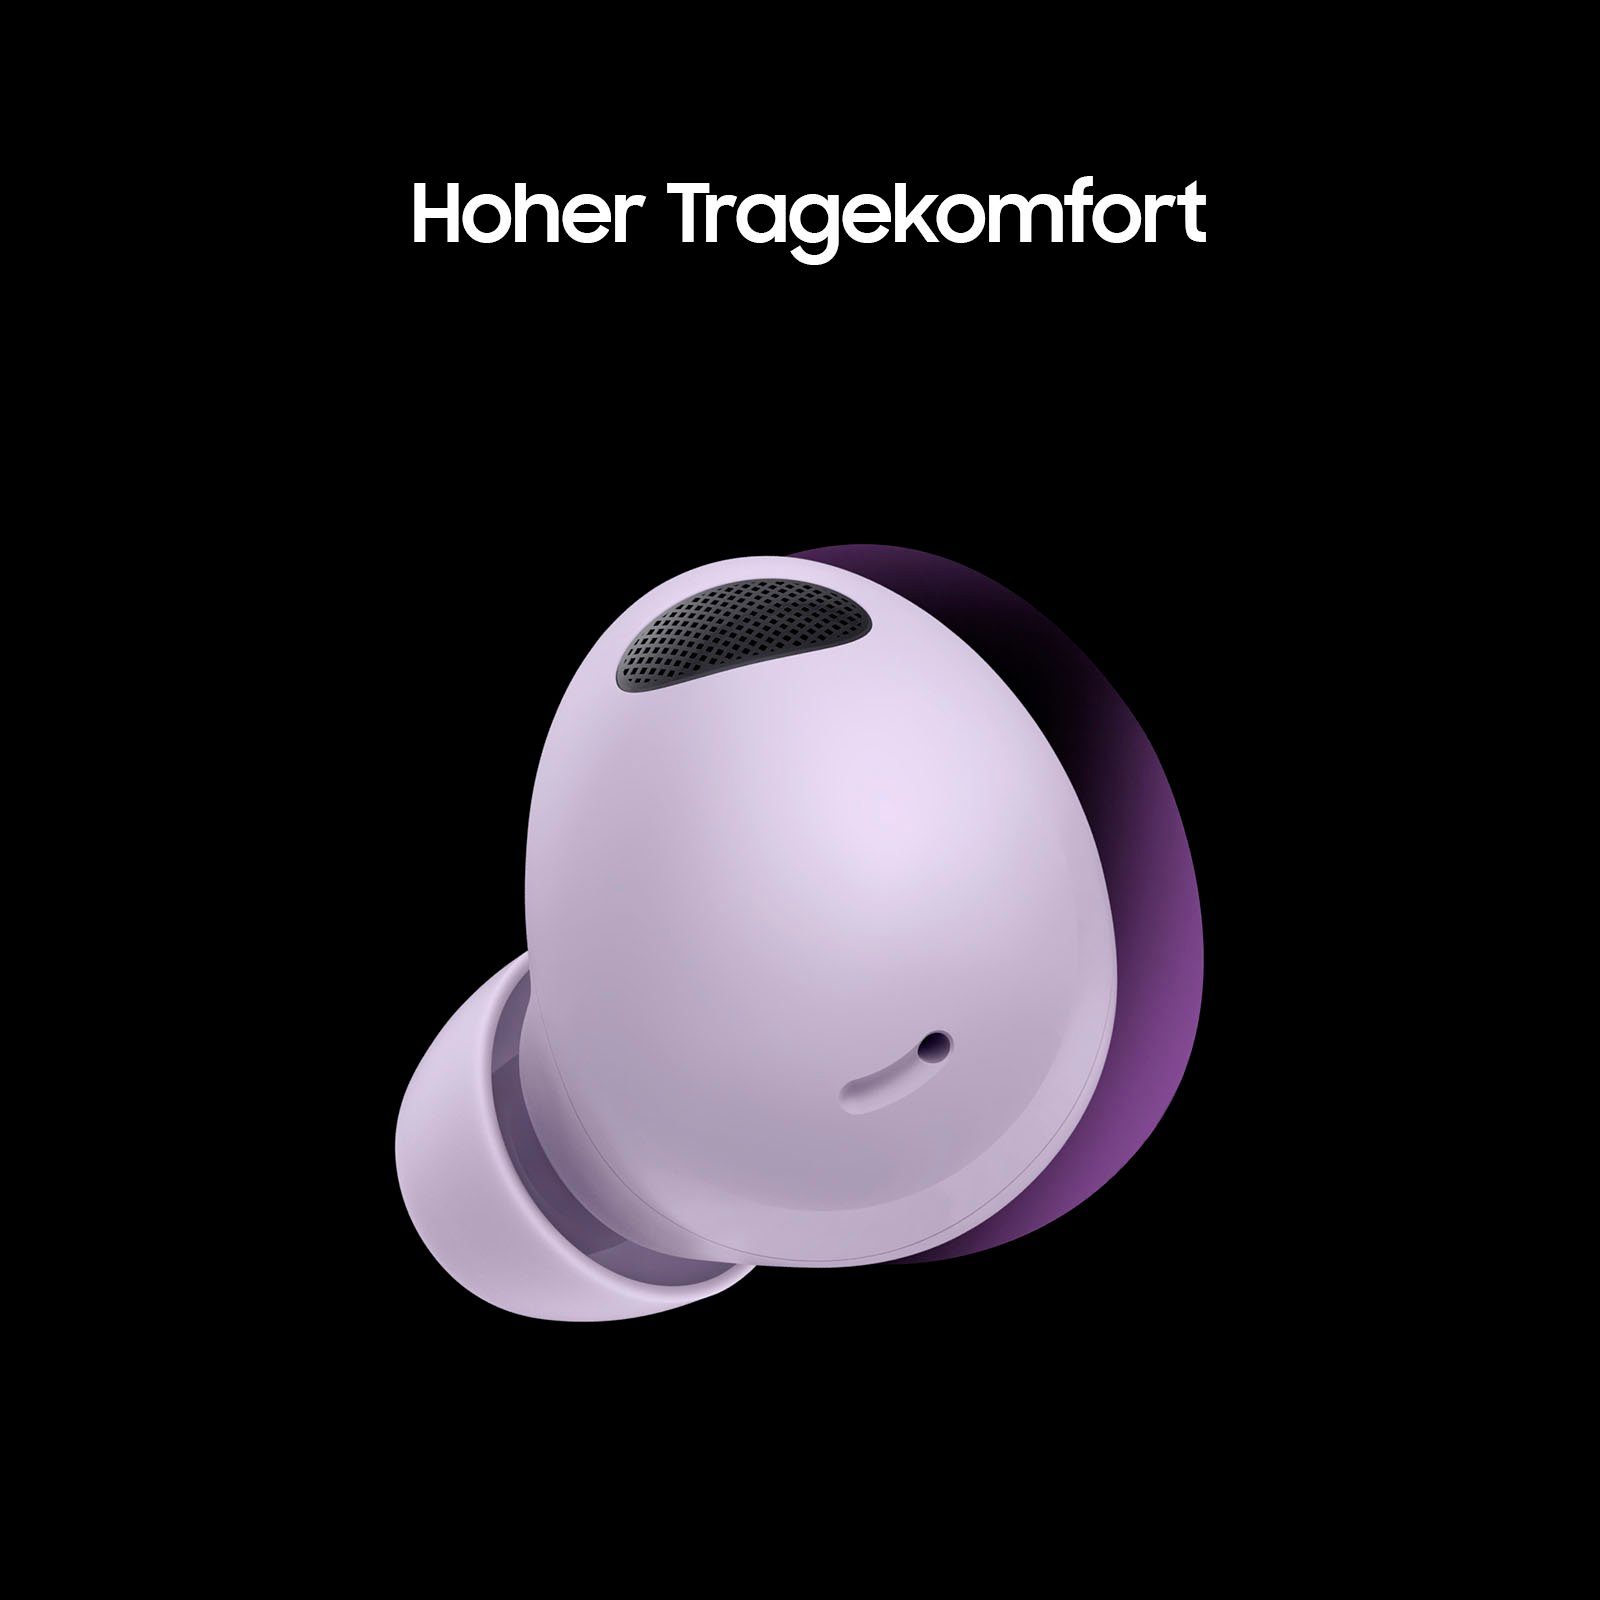 Bora Purple Sprachsteuerung, Freisprechfunktion, wireless Bluetooth, Galaxy Pro Noise In-Ear-Kopfhörer Buds2 A2DP Bluetooth, (Active HFP) Cancelling (ANC), Samsung AVRCP Bixby,